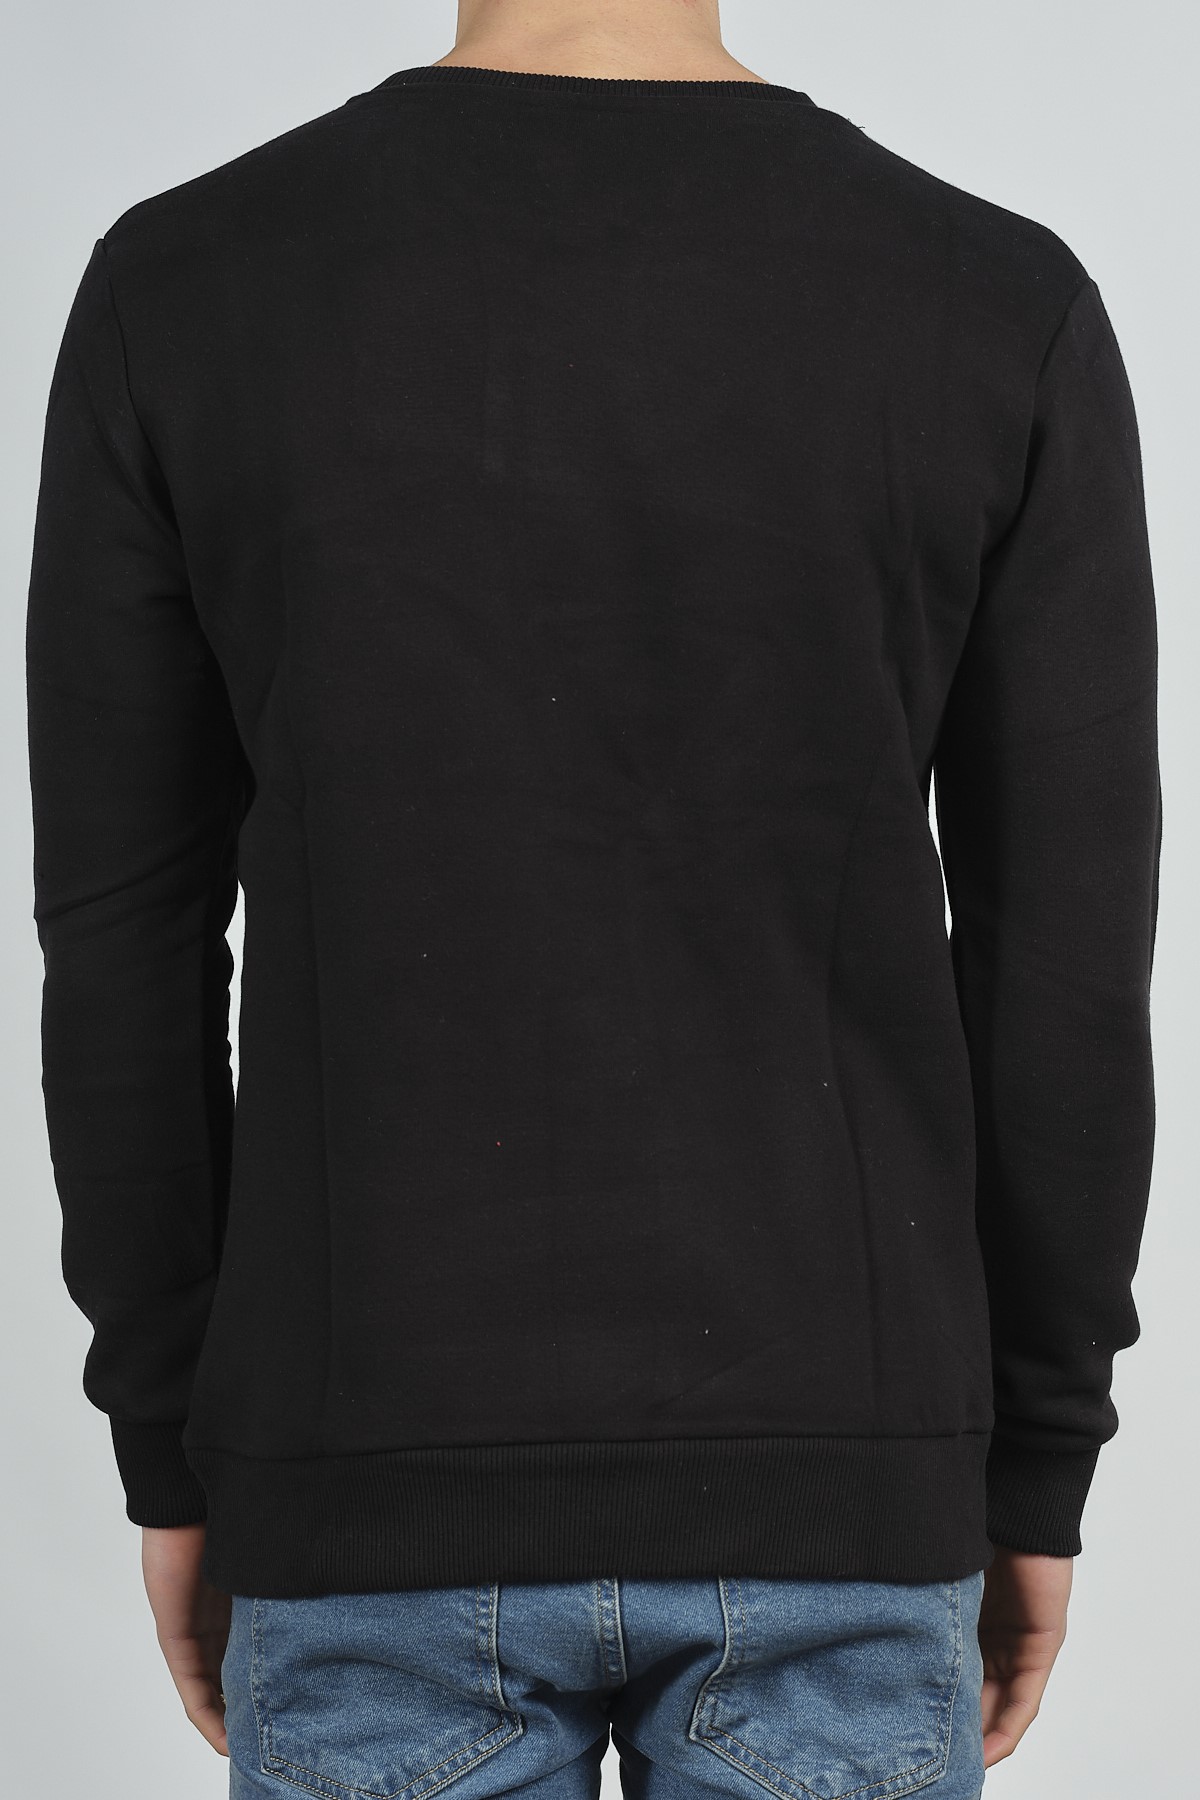 Siyah Baskılı Sweatshirt 1KXE8-44268-02 - 3